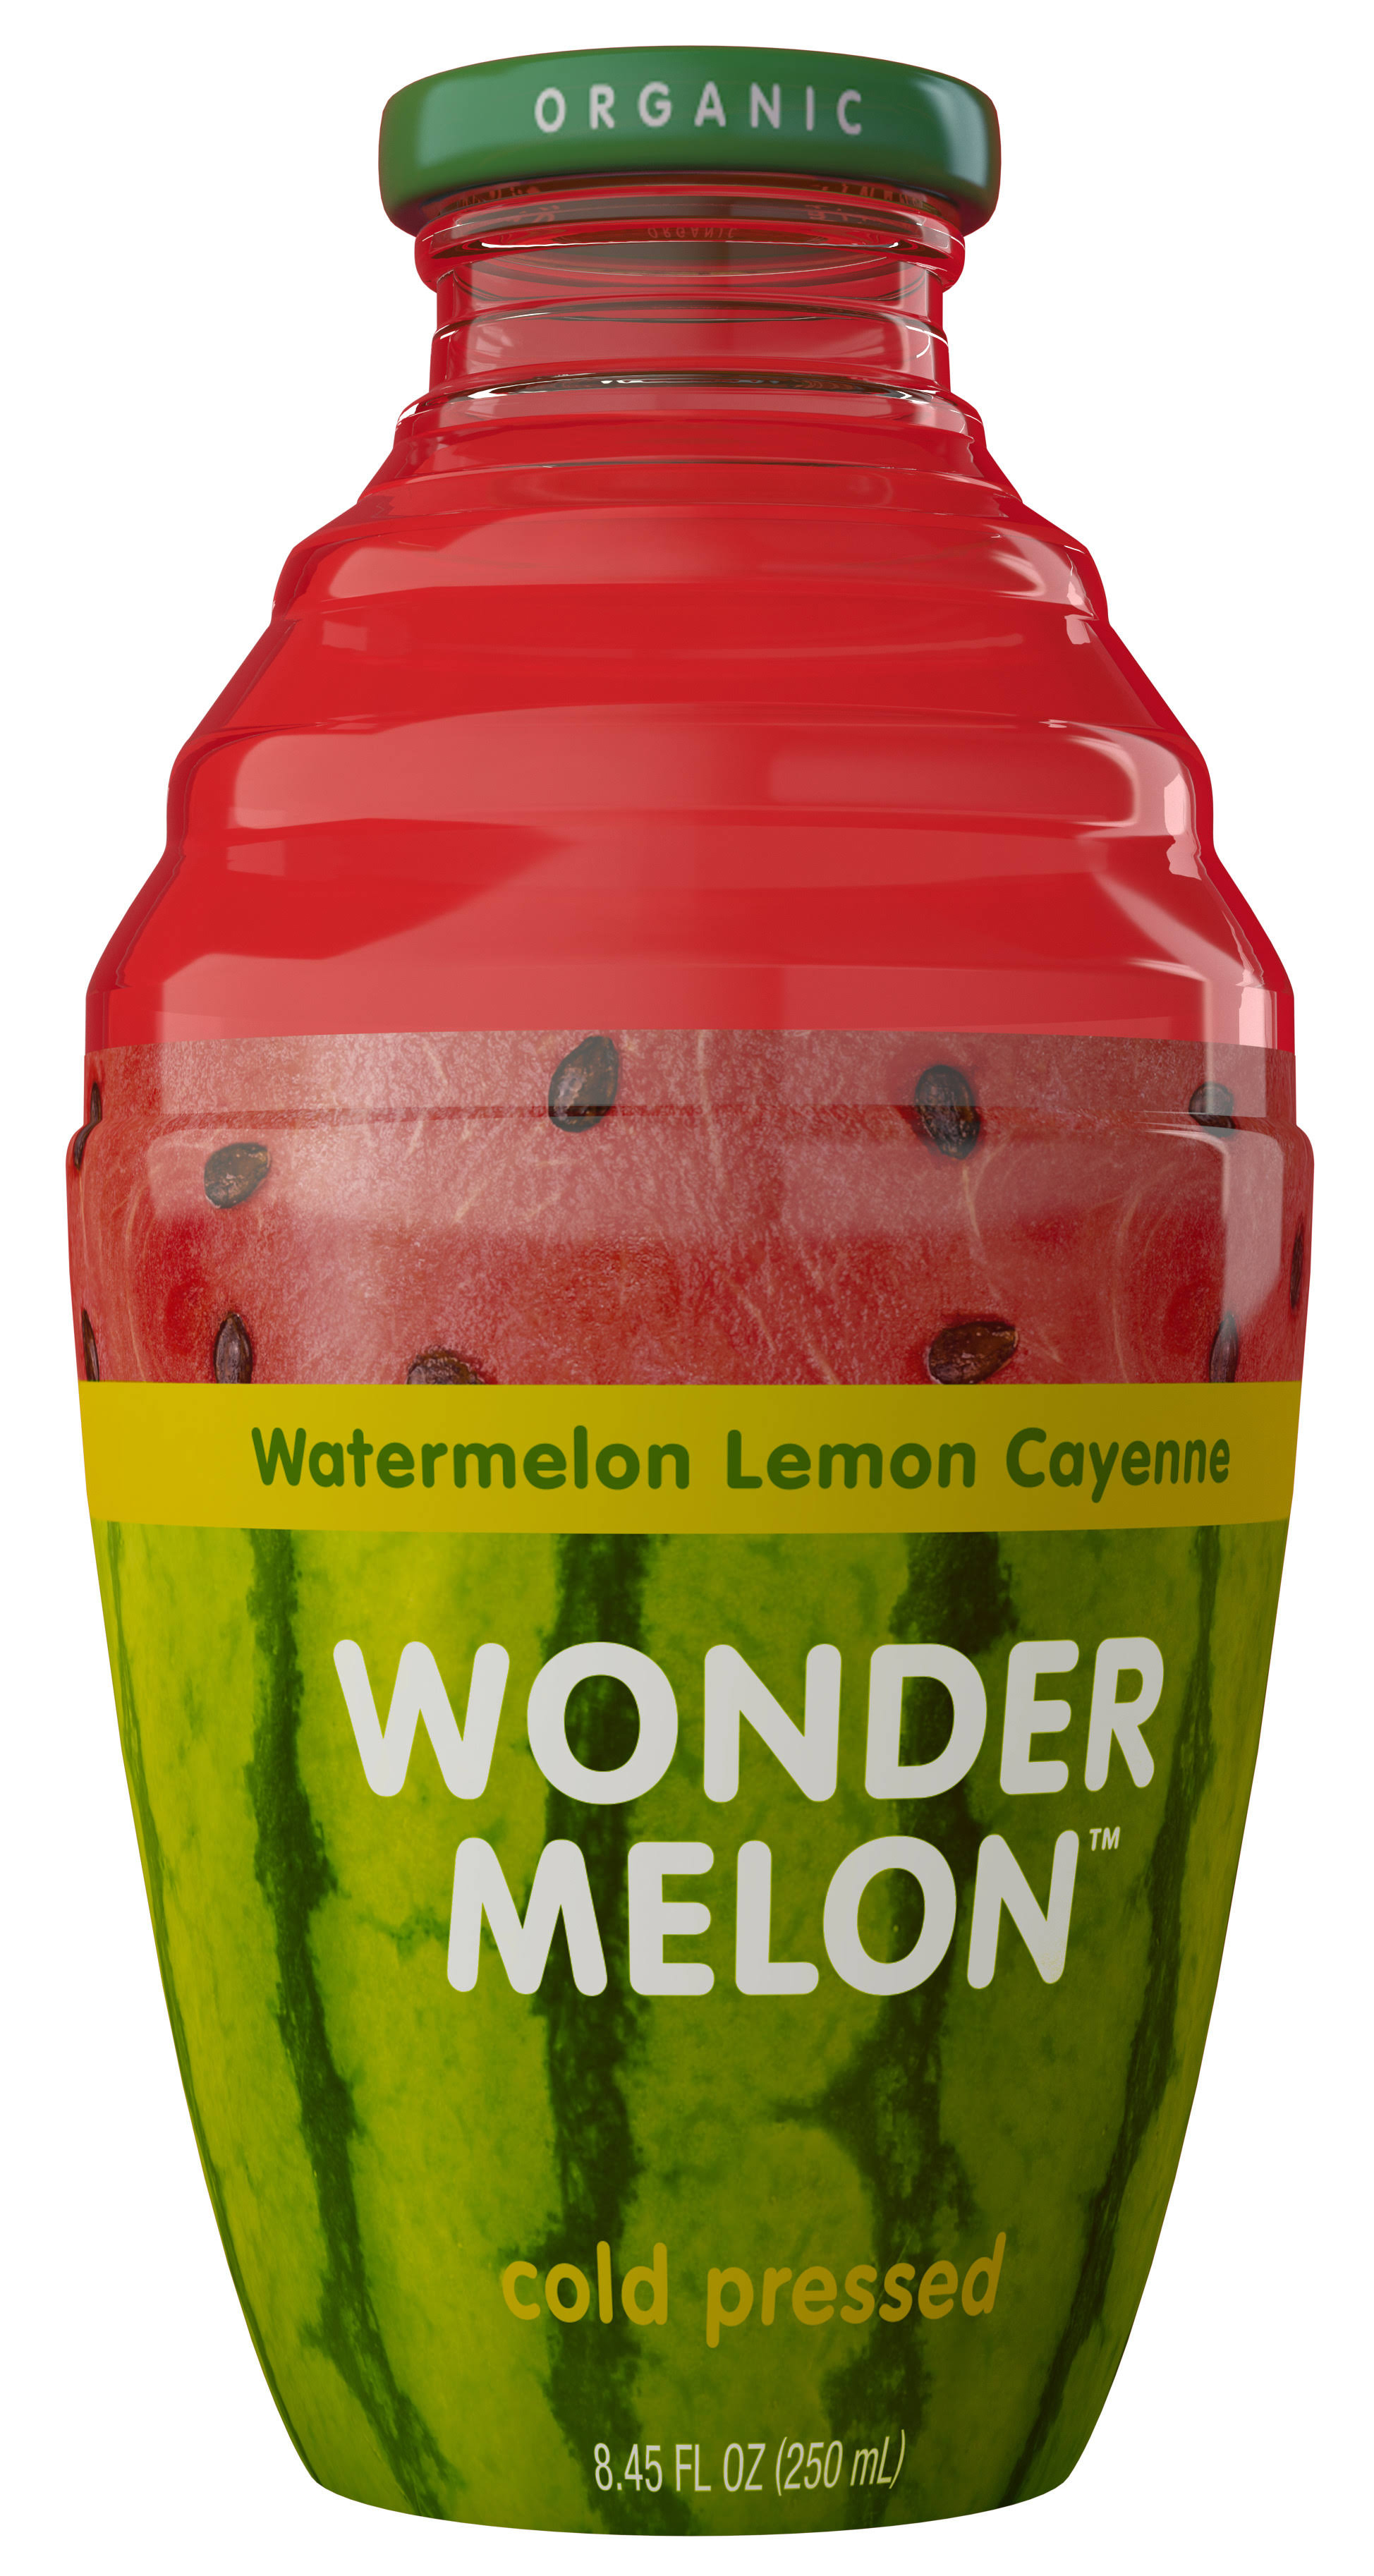 Wonder Melon Watermelon Lemon Cayenne Organic Juice, 8.45 fl oz